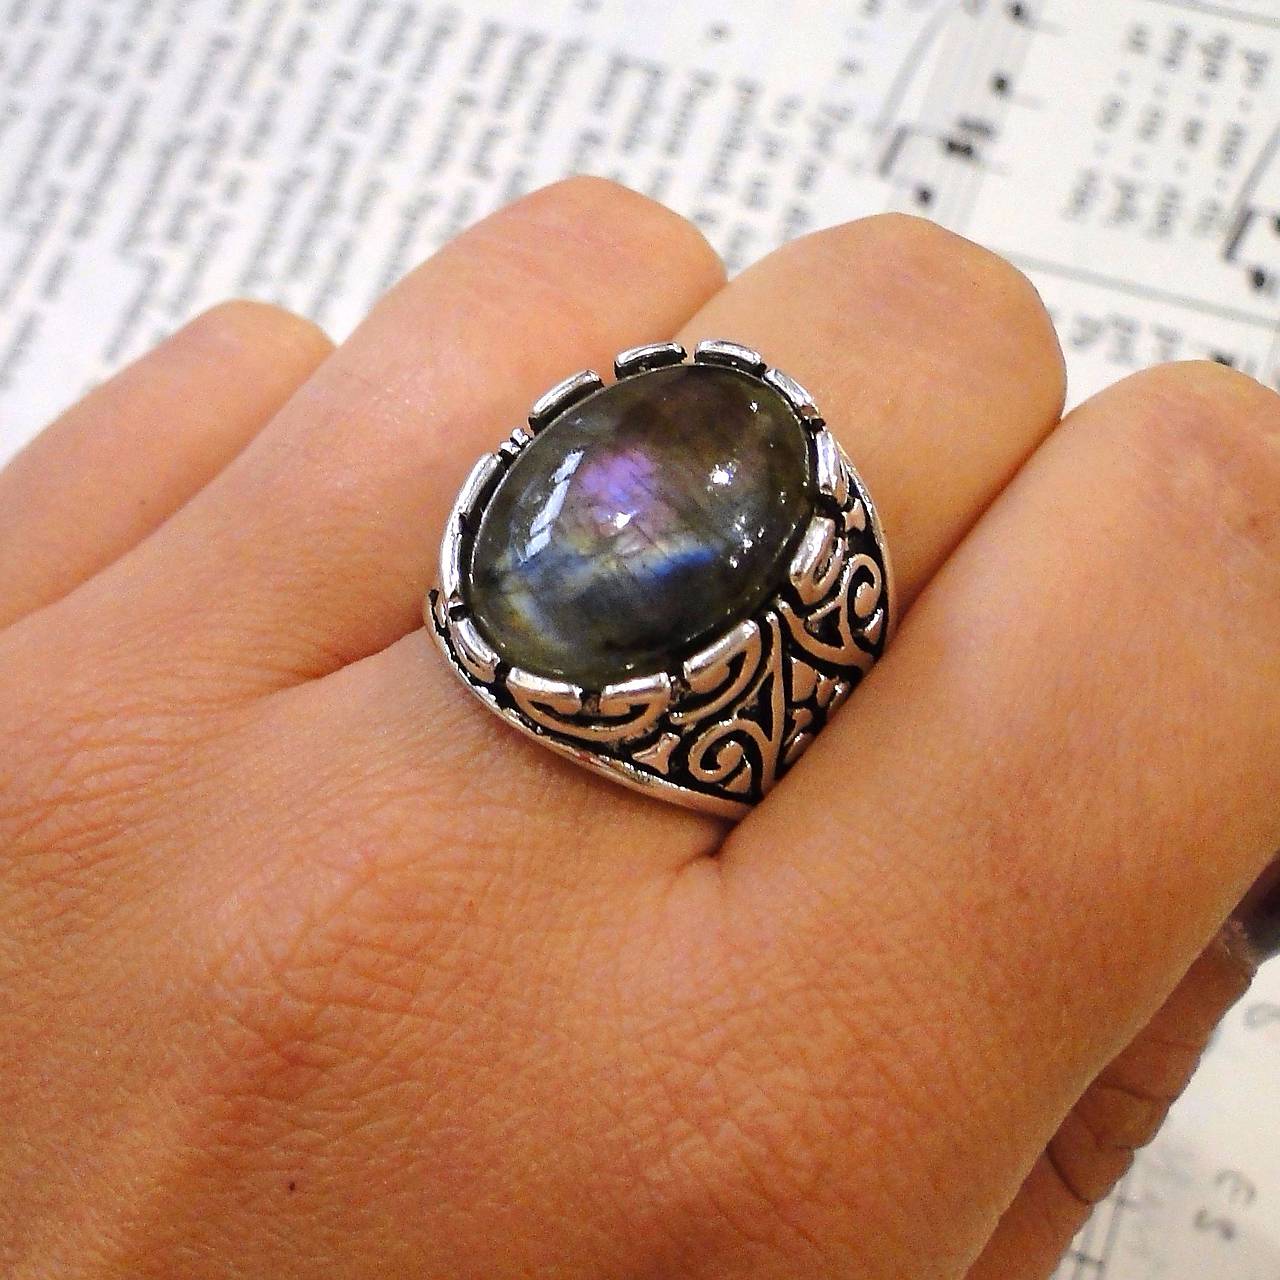 Massive Violet Labradorite Ring / Masívny vintage prsteň s fialovým labradoritom /0524